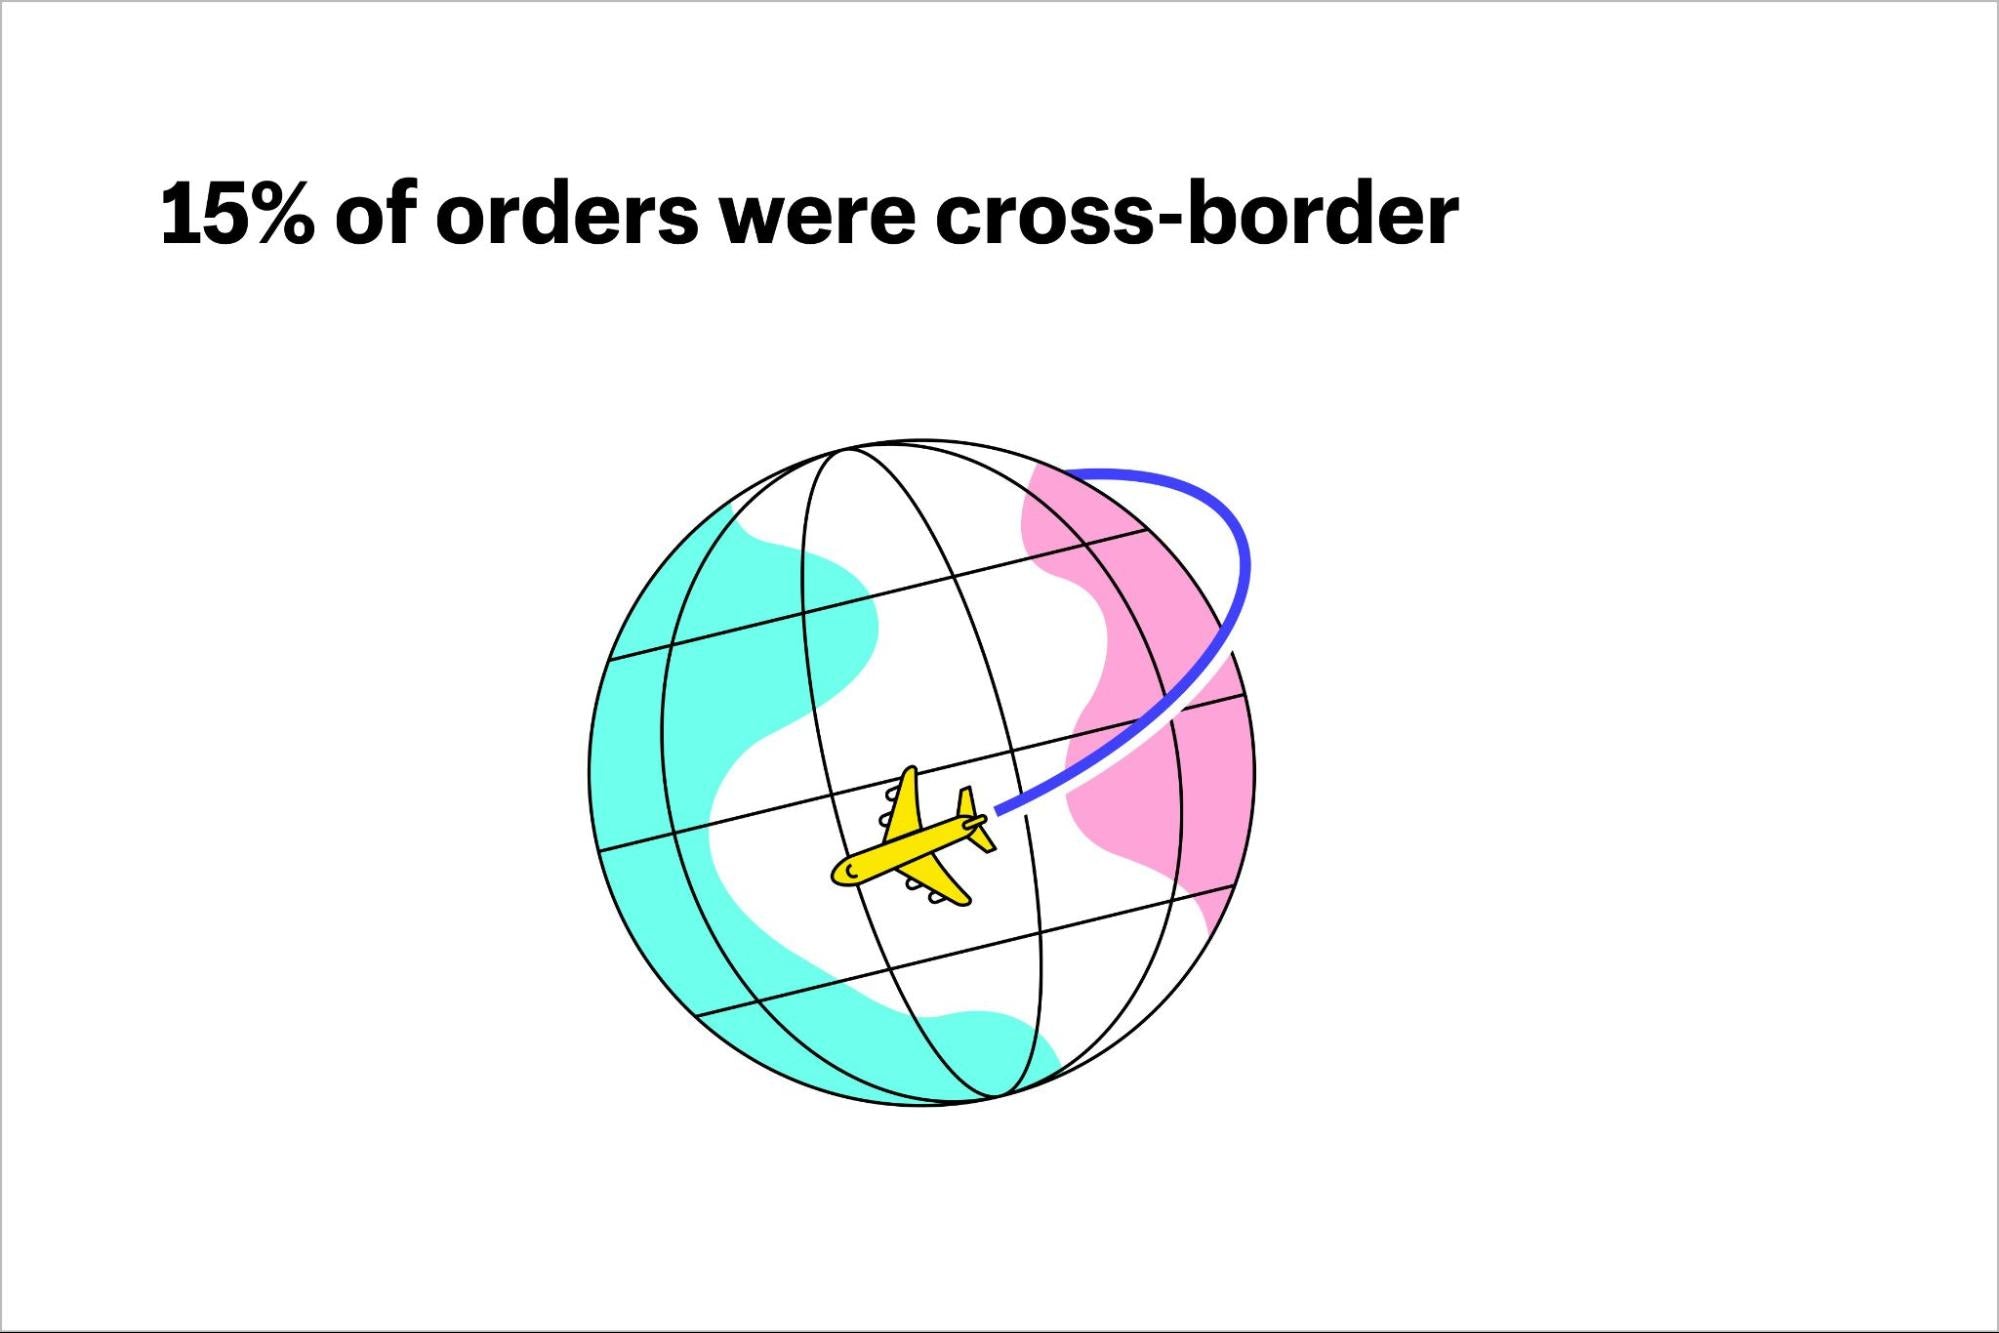 15% of orders were cross-border.